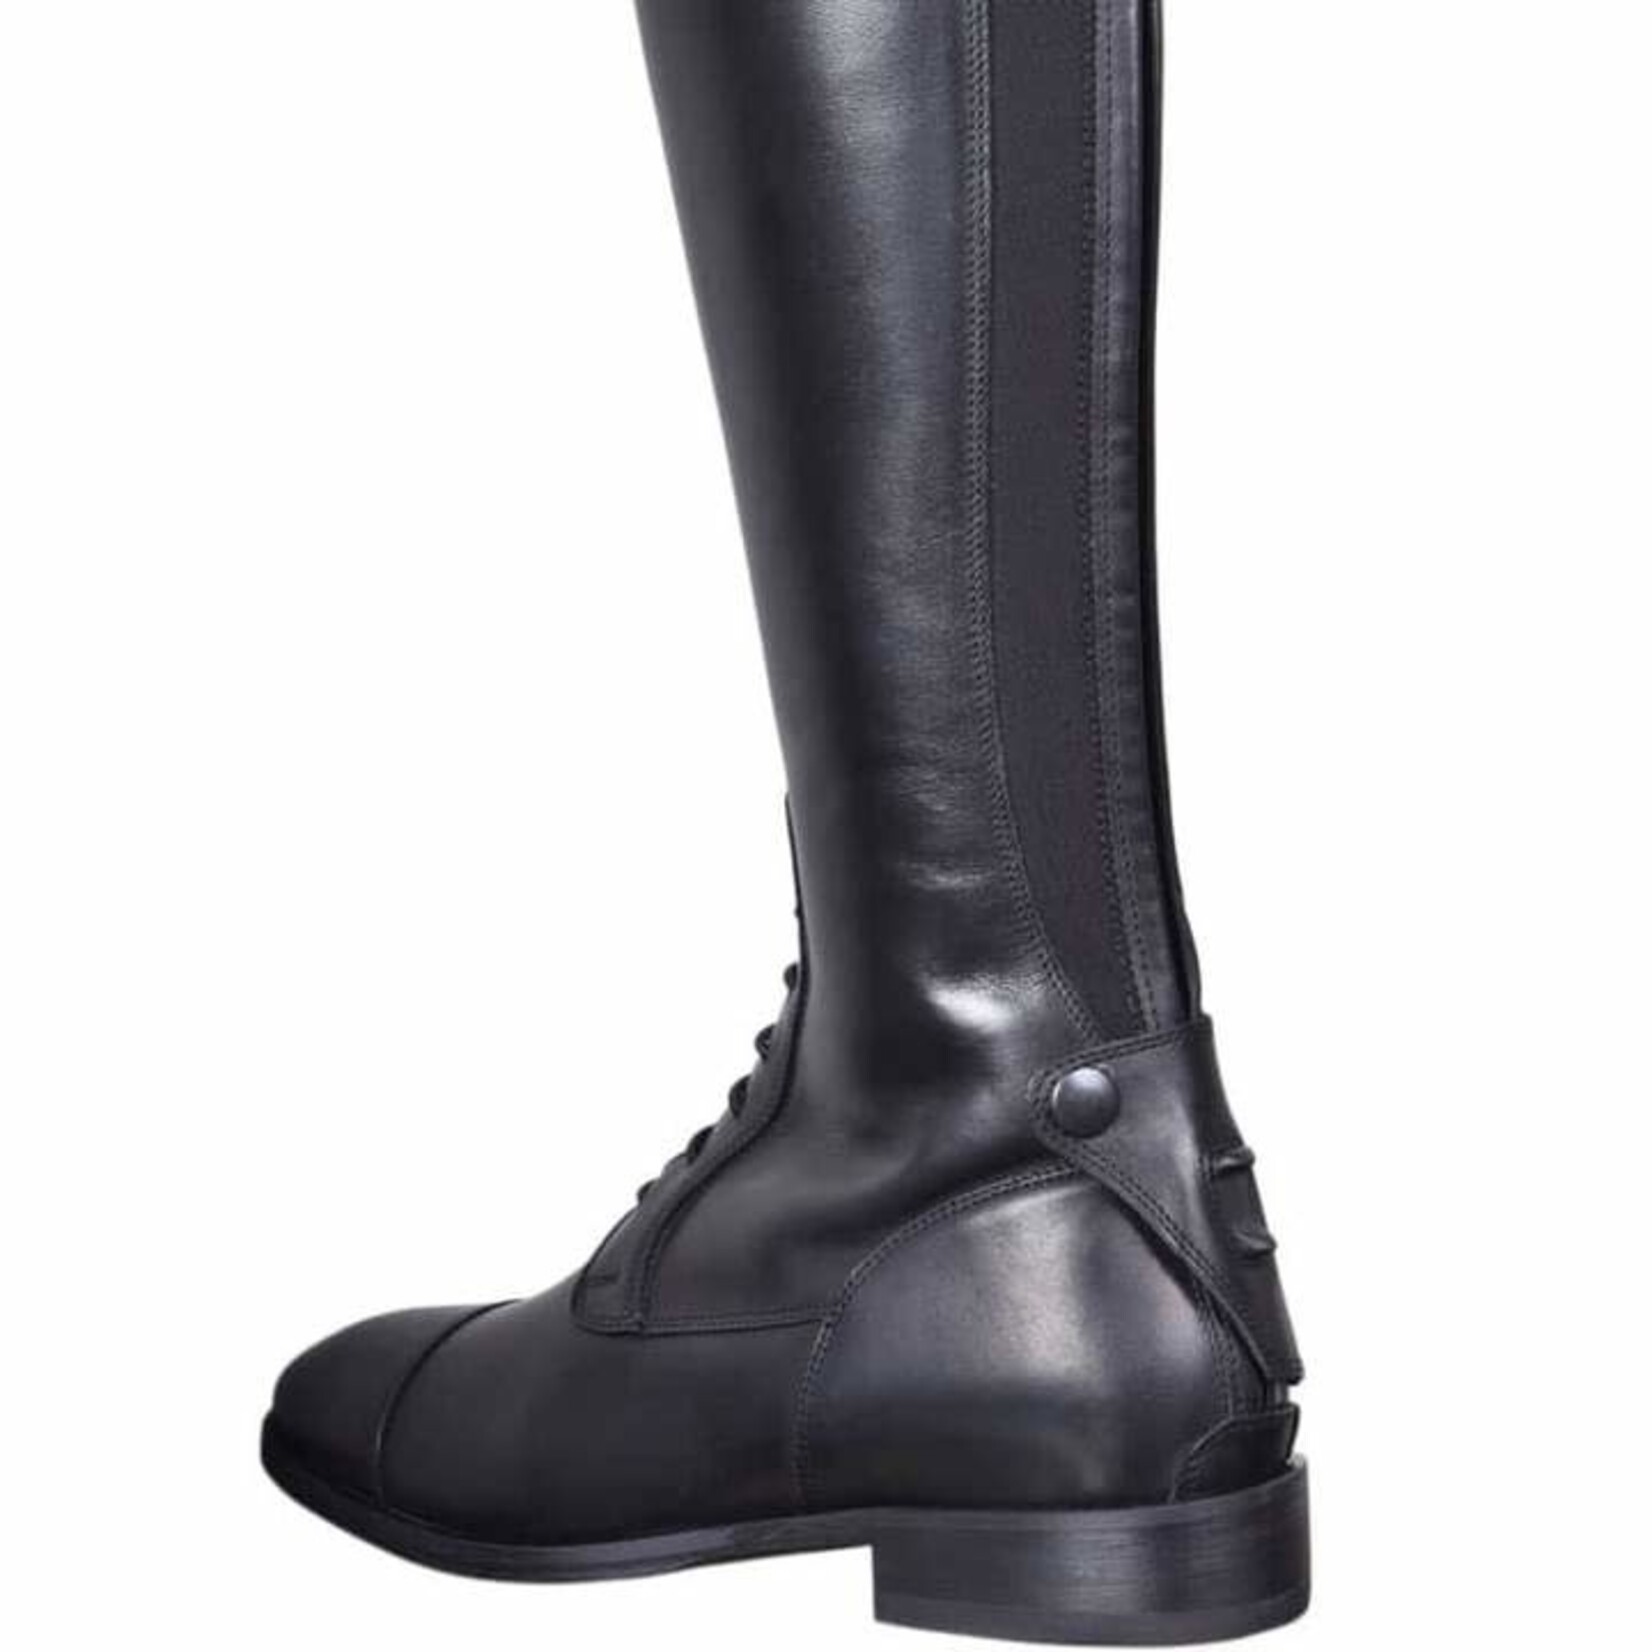 Deniro Boot Deniro Amabile New Pro Tricolore Line Smooth Leather Dress Tall Boot